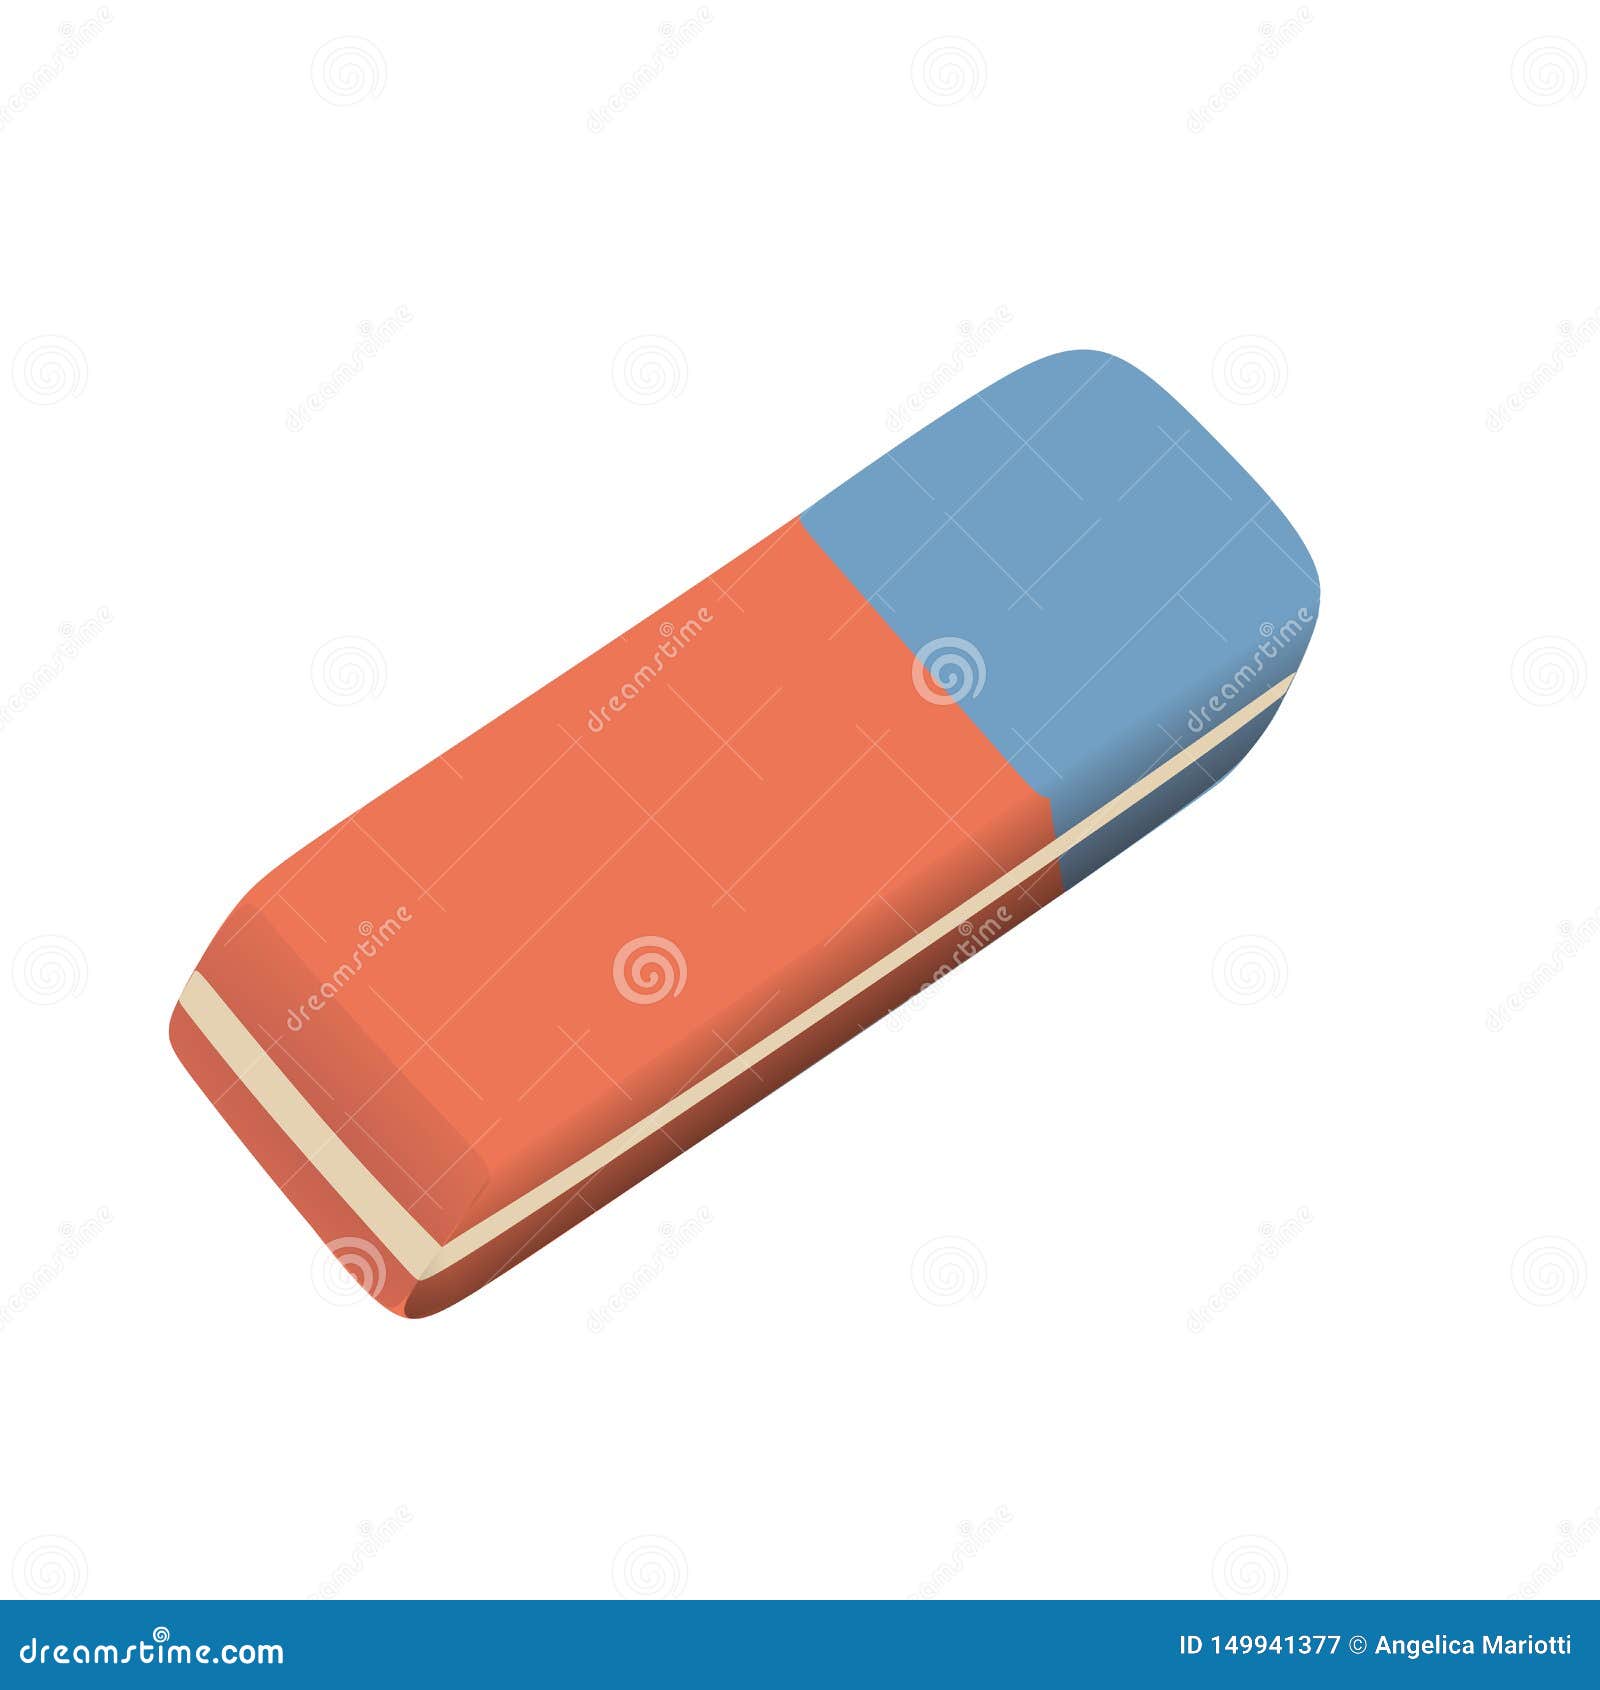 red and blue eraser 